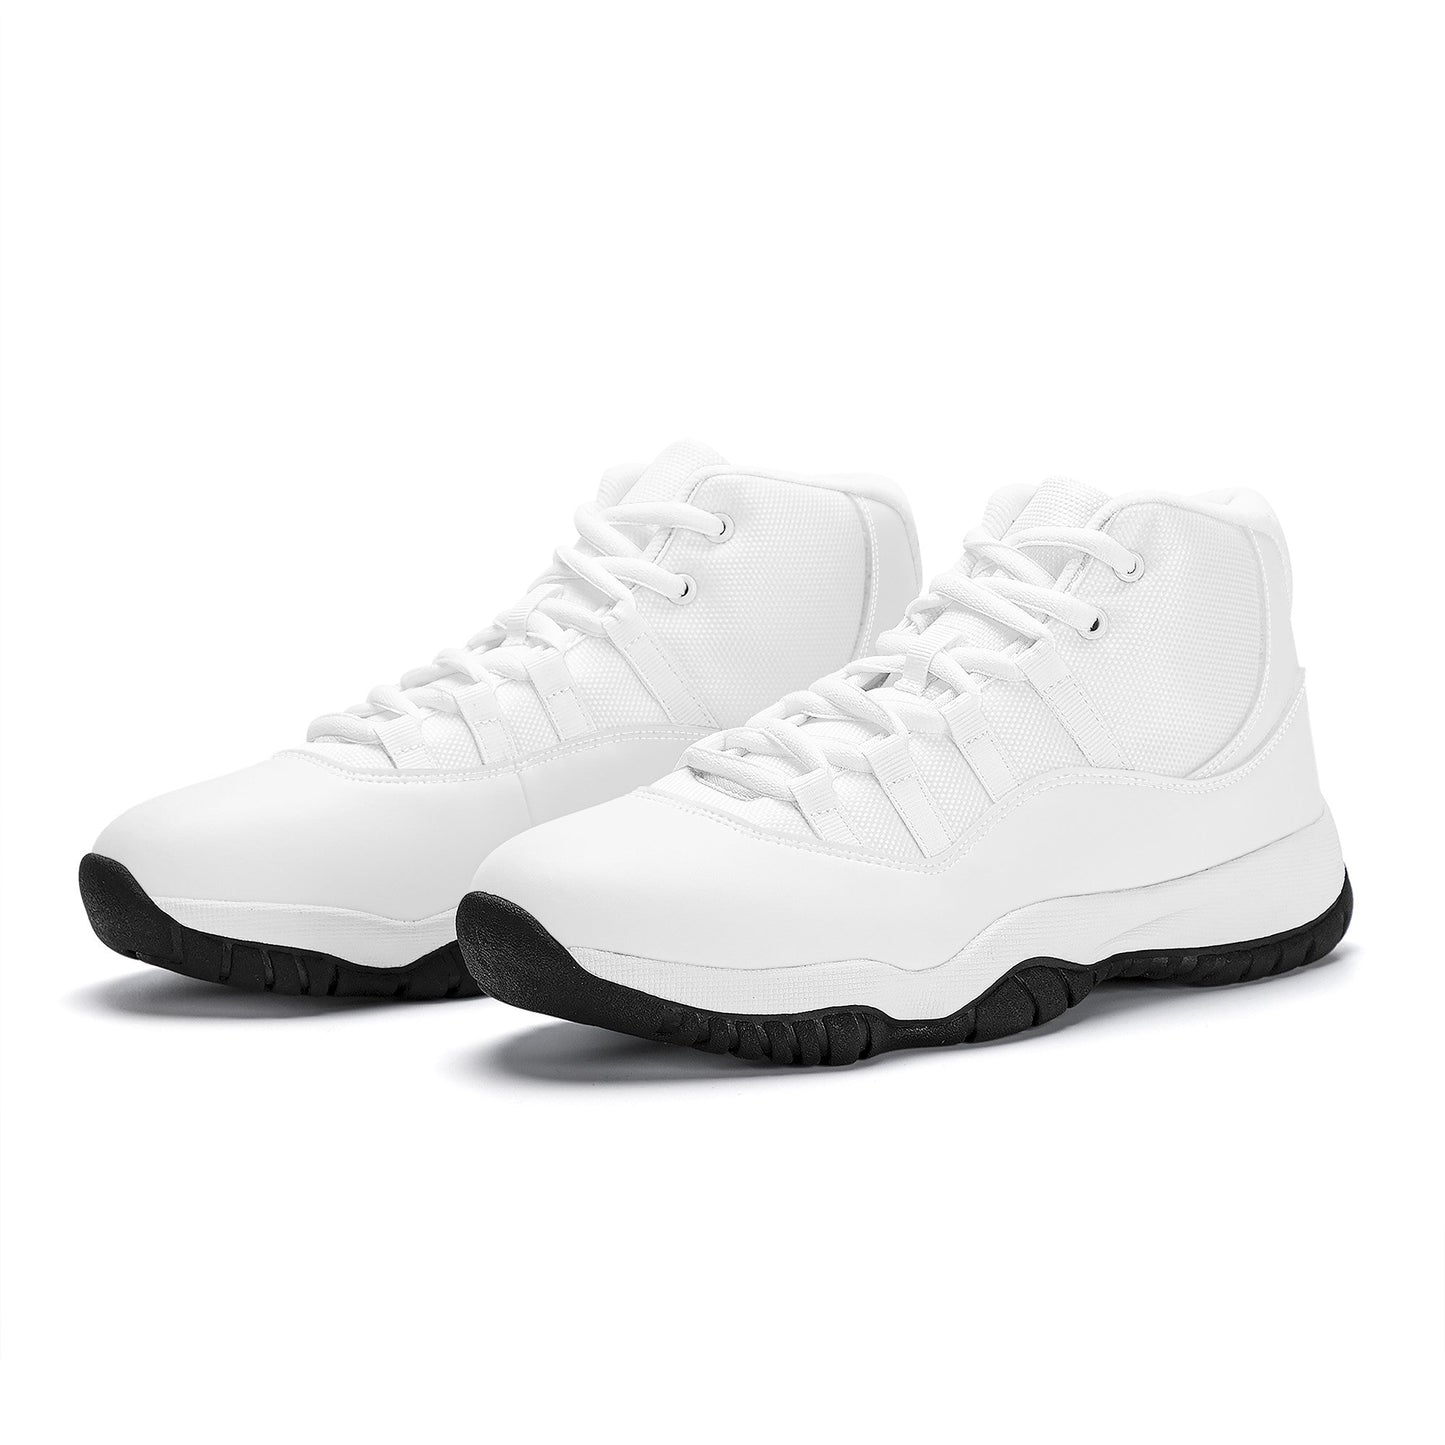 Custom High Top Sneakers - White Air Retro Colloid Colors 